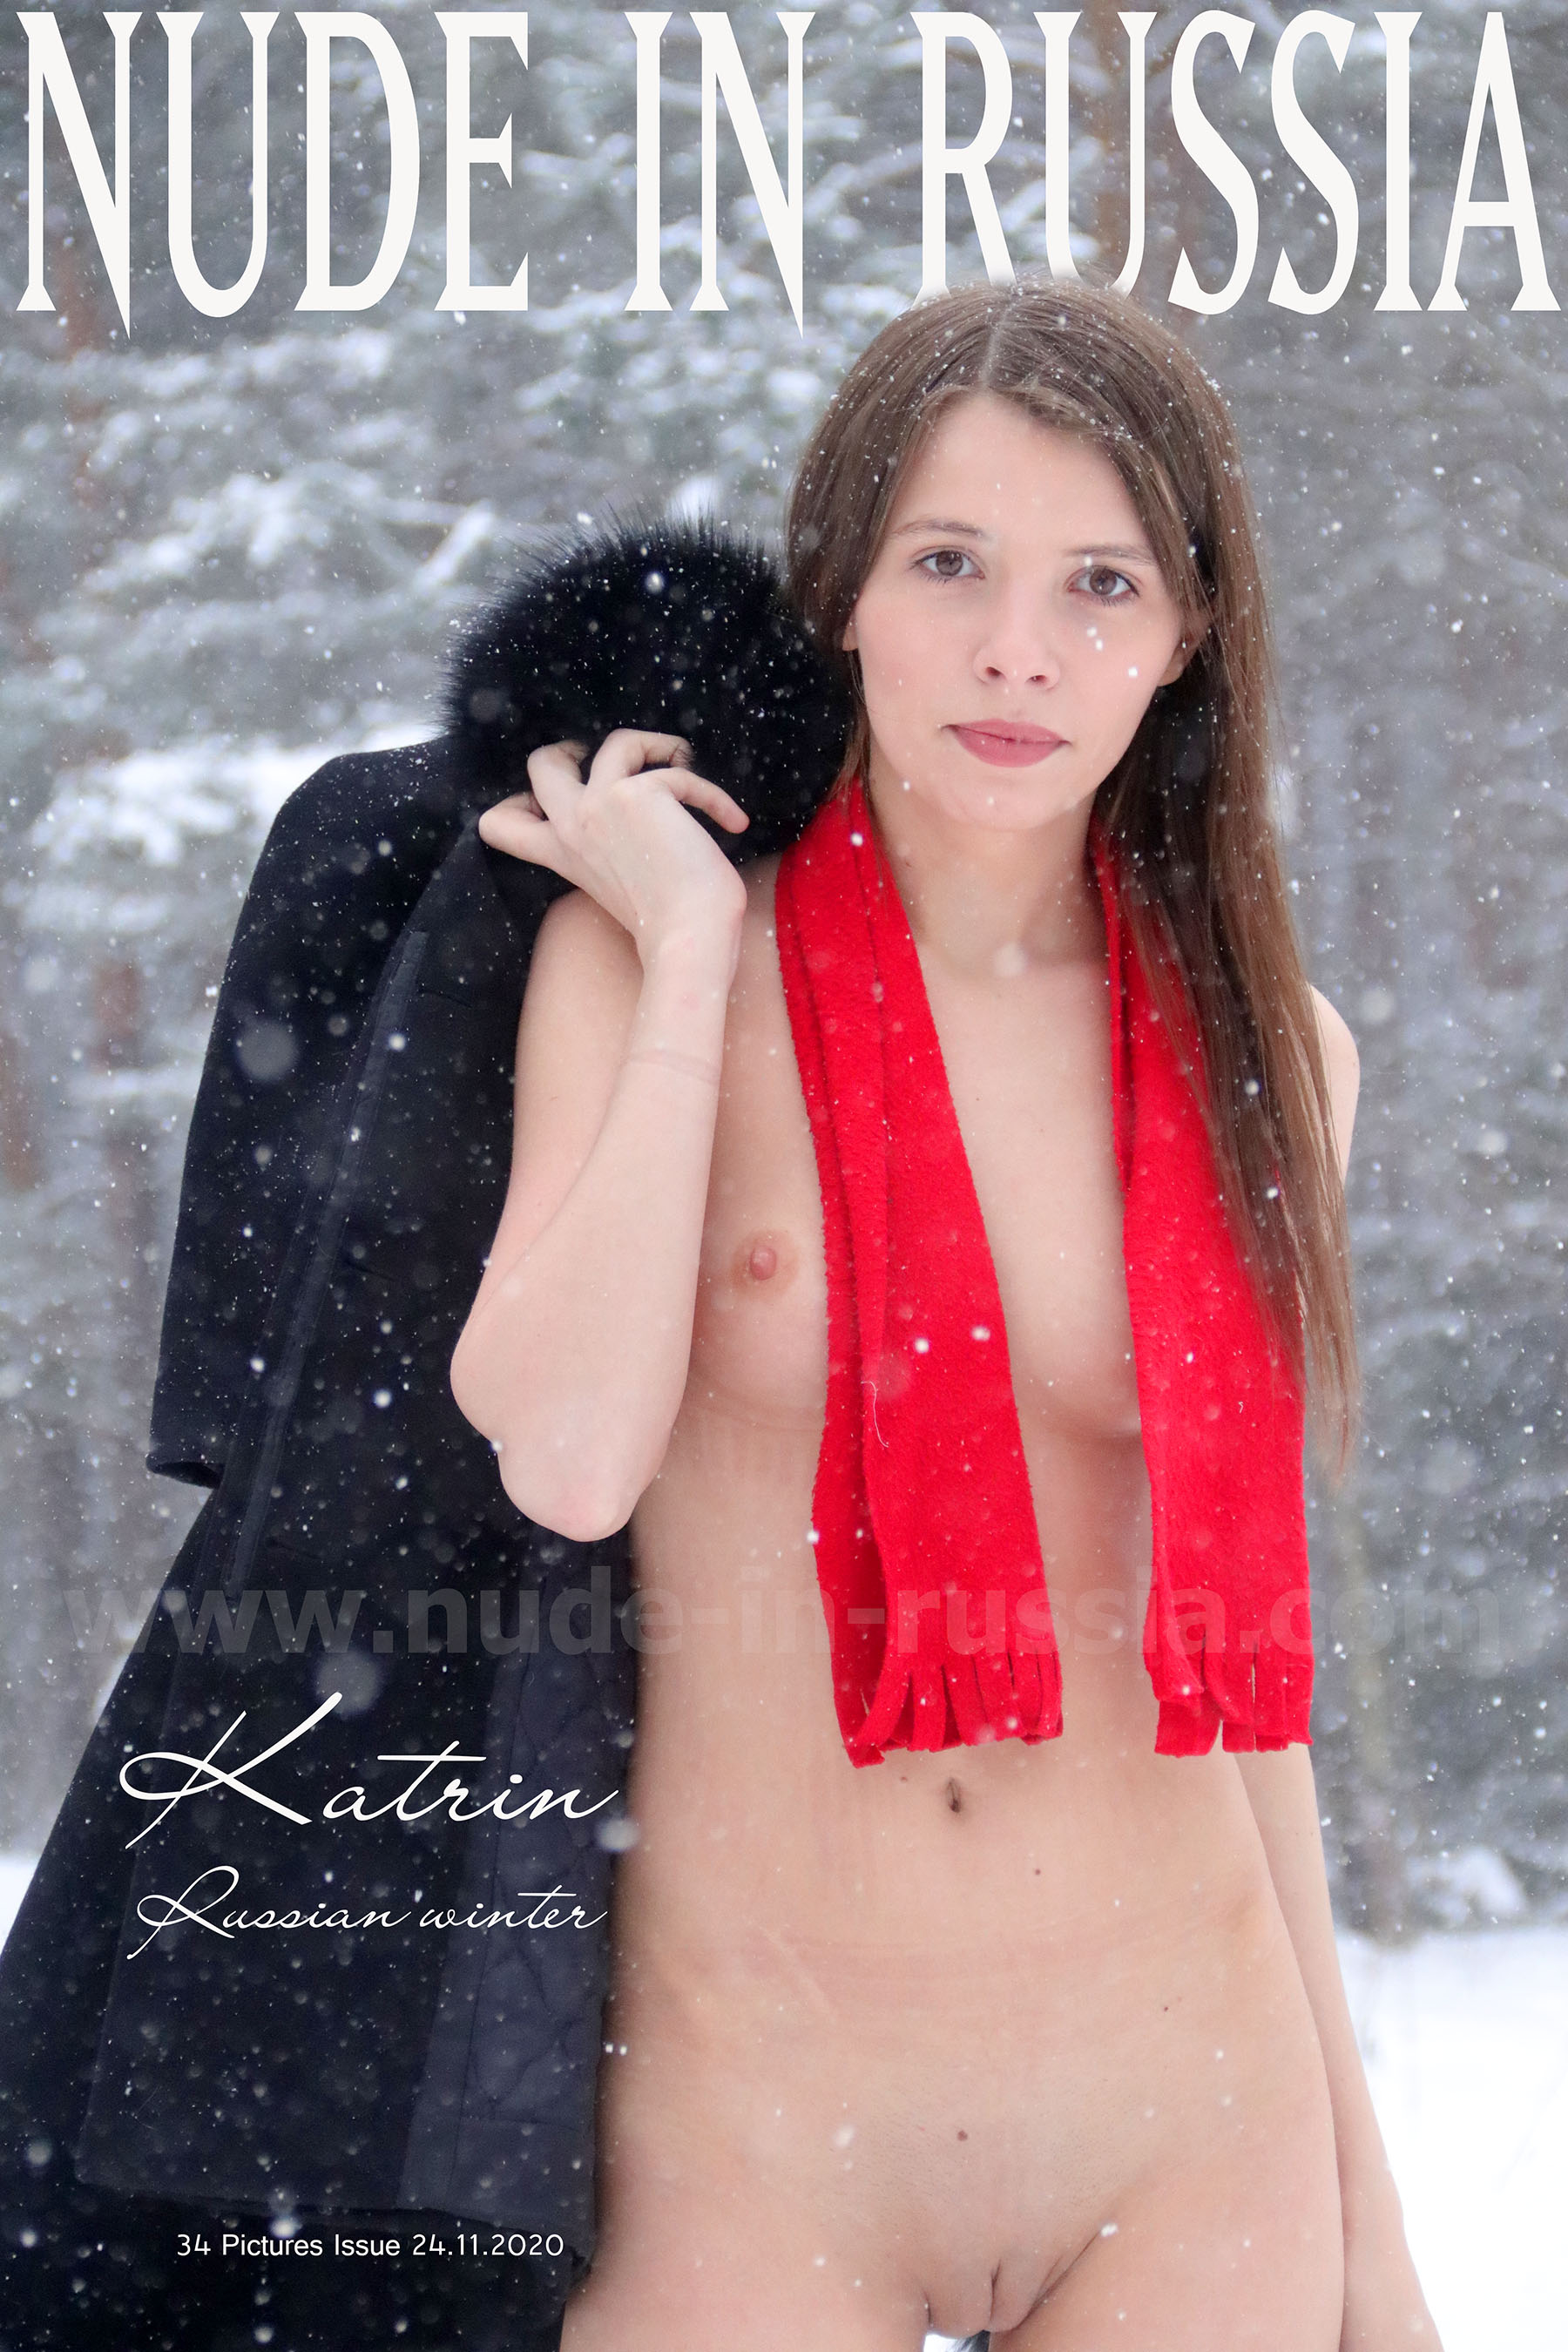 NIR-2020-11-24 - Katrin 2 - Russian winter - set4 27 (1).jpg